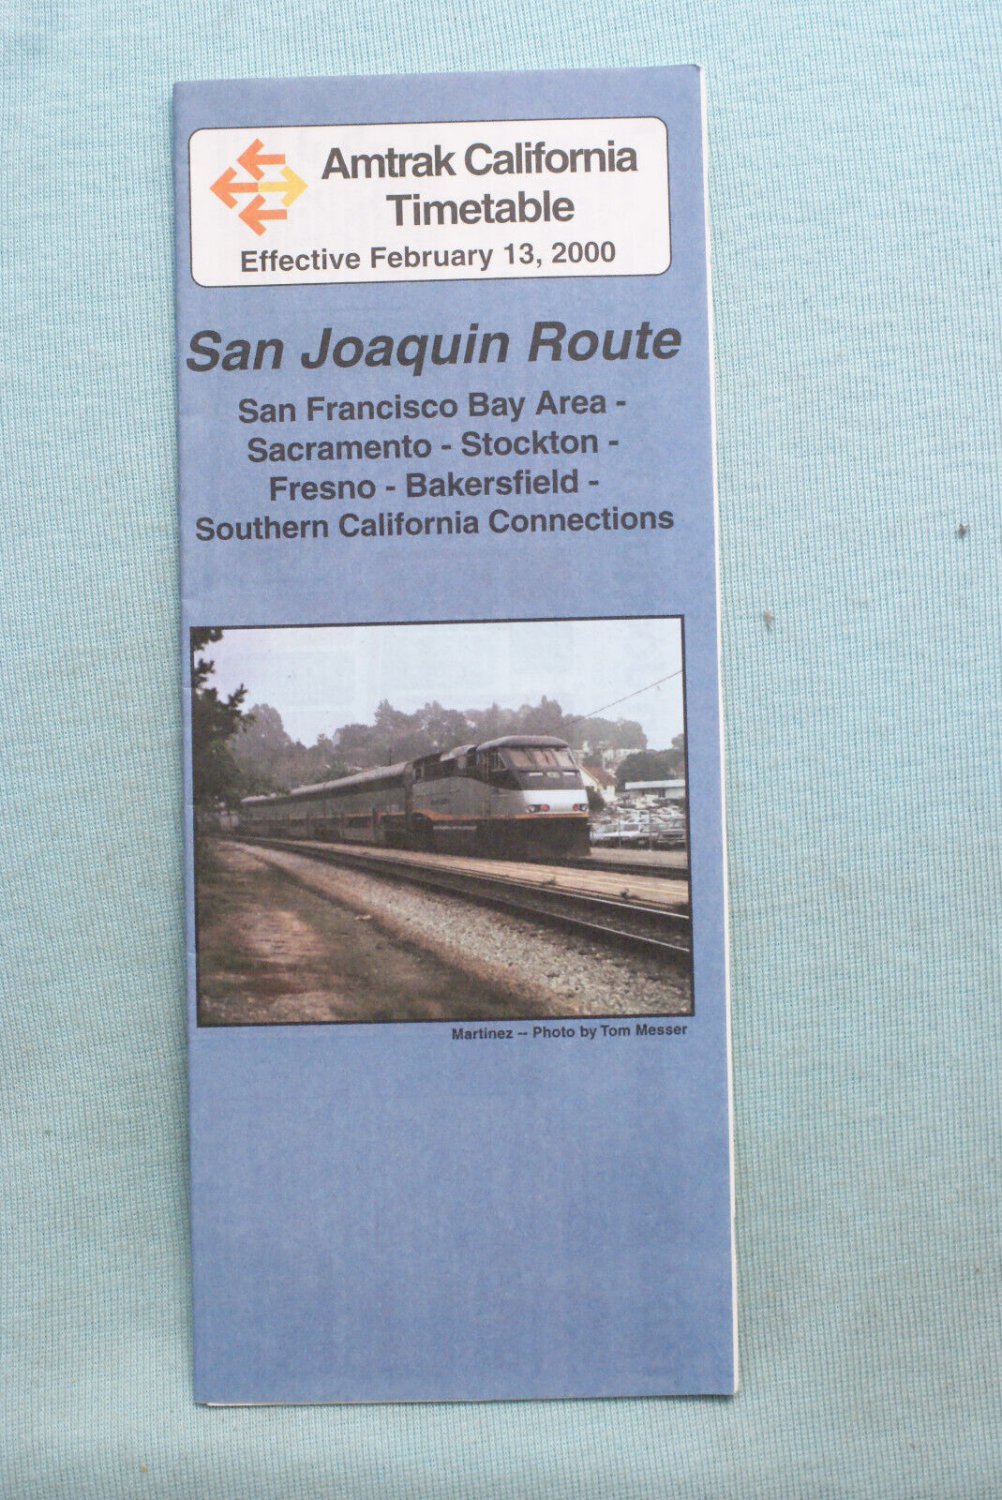 San Joaquin Route - Amtrak Timetable - Feb 13, 2000